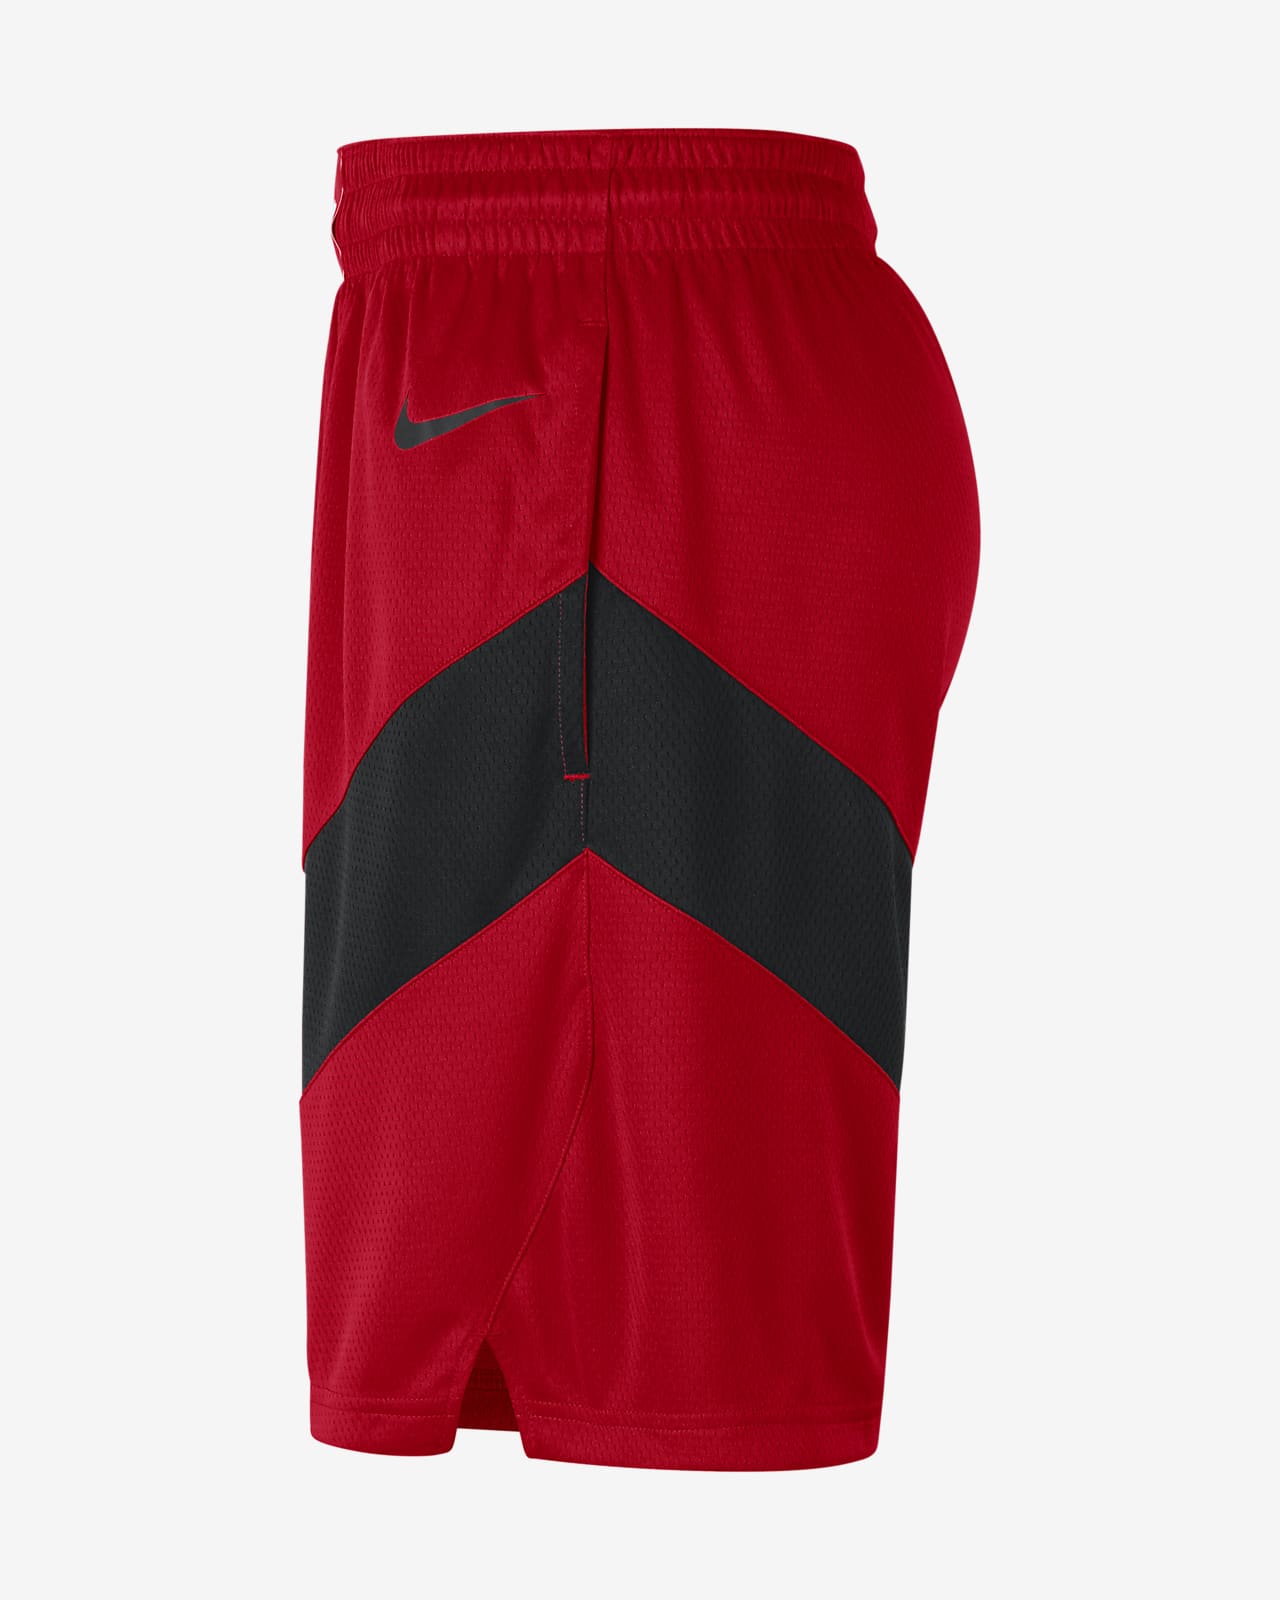 Toronto Raptors Icon Edition 2020 Men's Nike NBA Swingman Shorts.